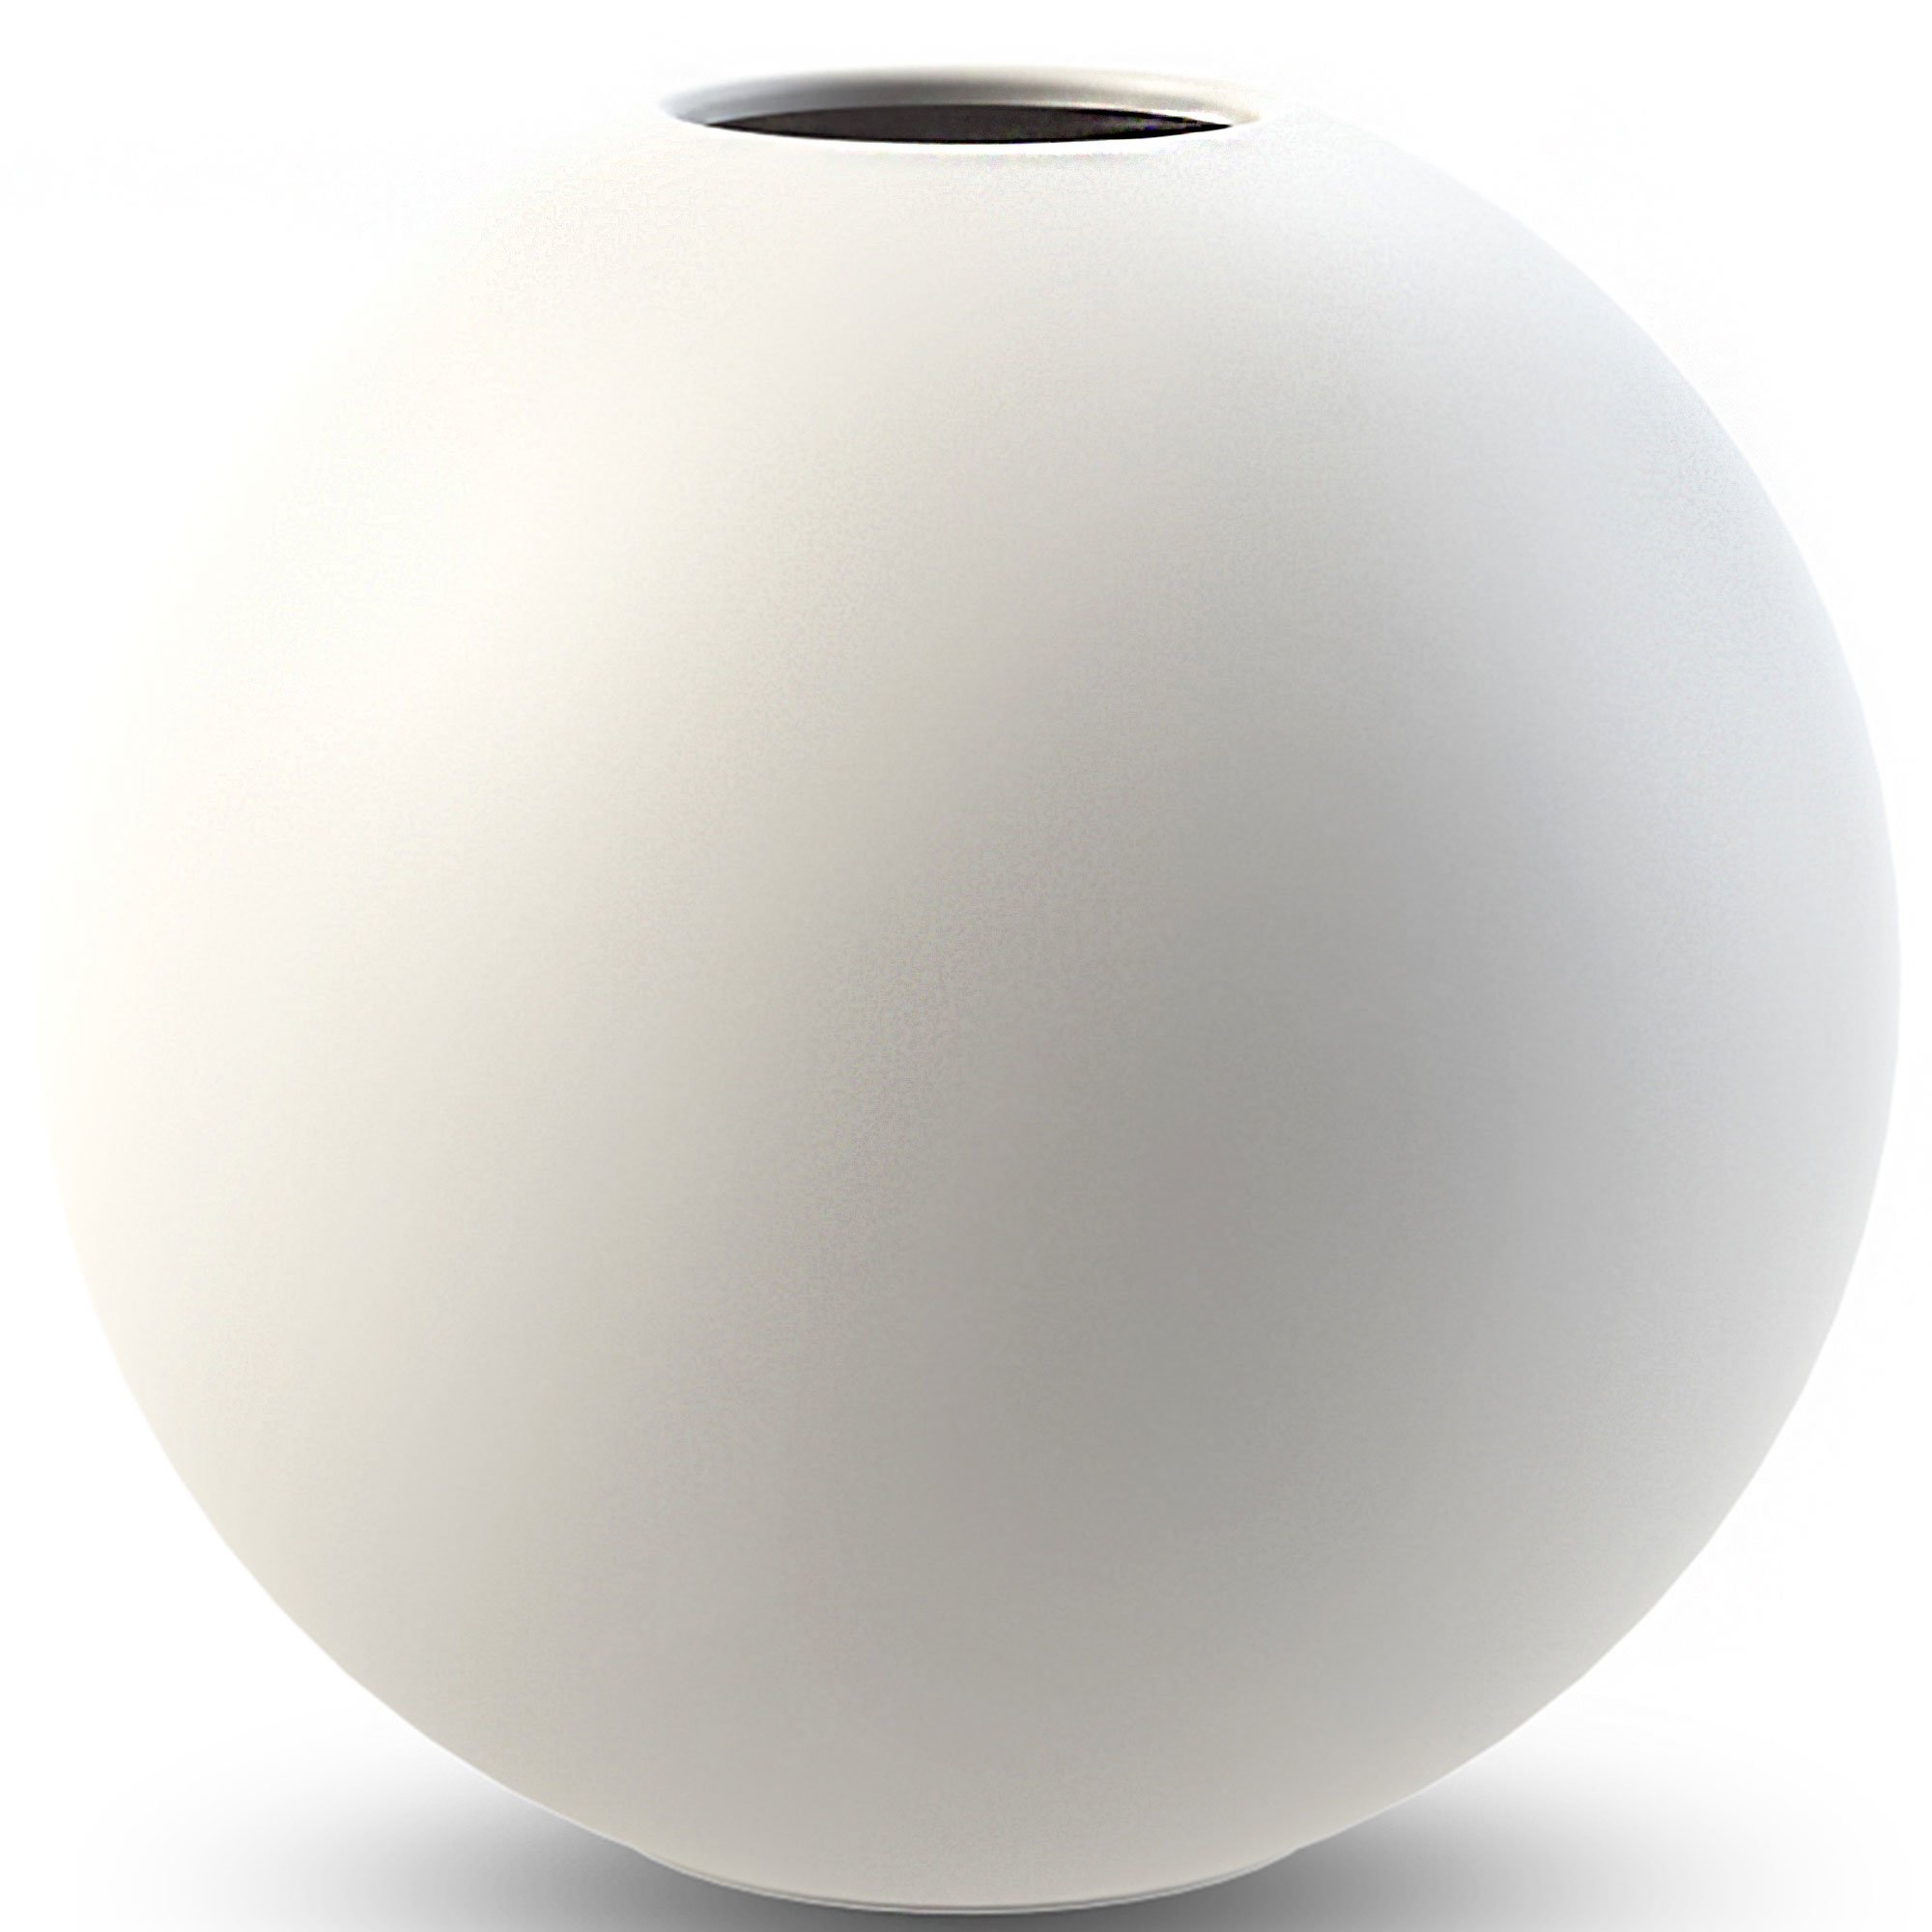 Cooee Design Ball vas 10 cm white